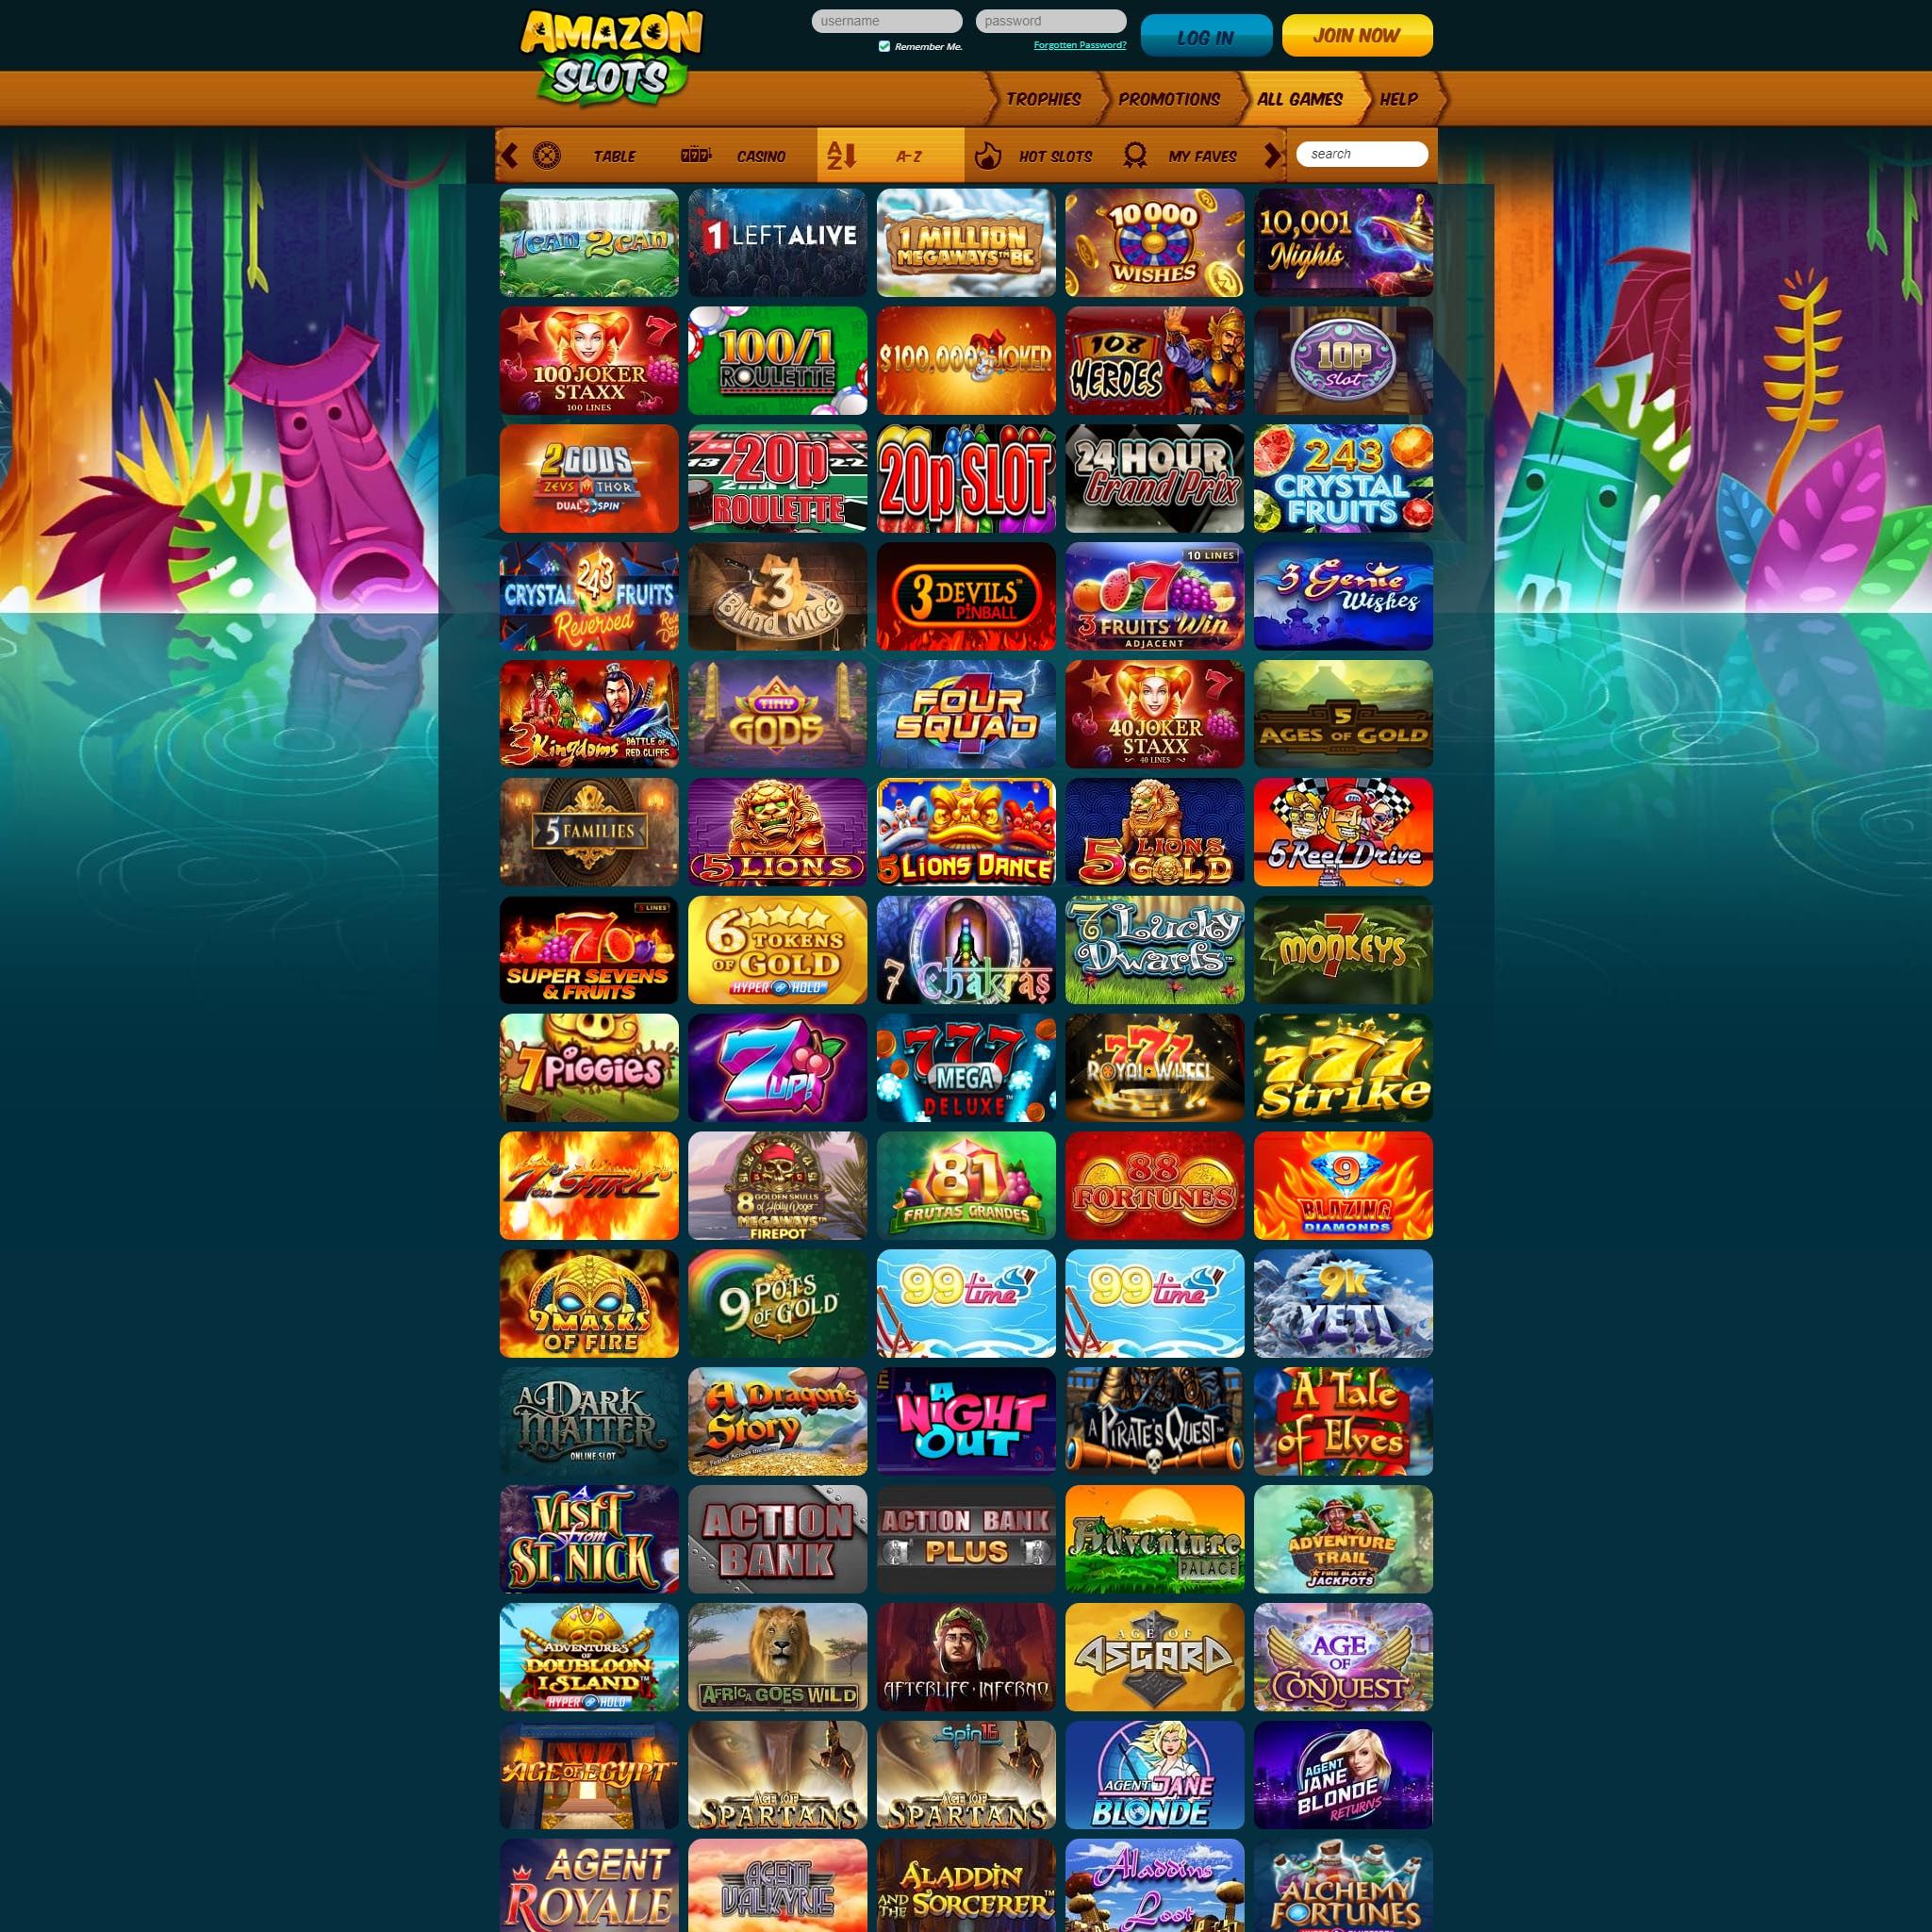 Amazon Slots Casino full games catalogue